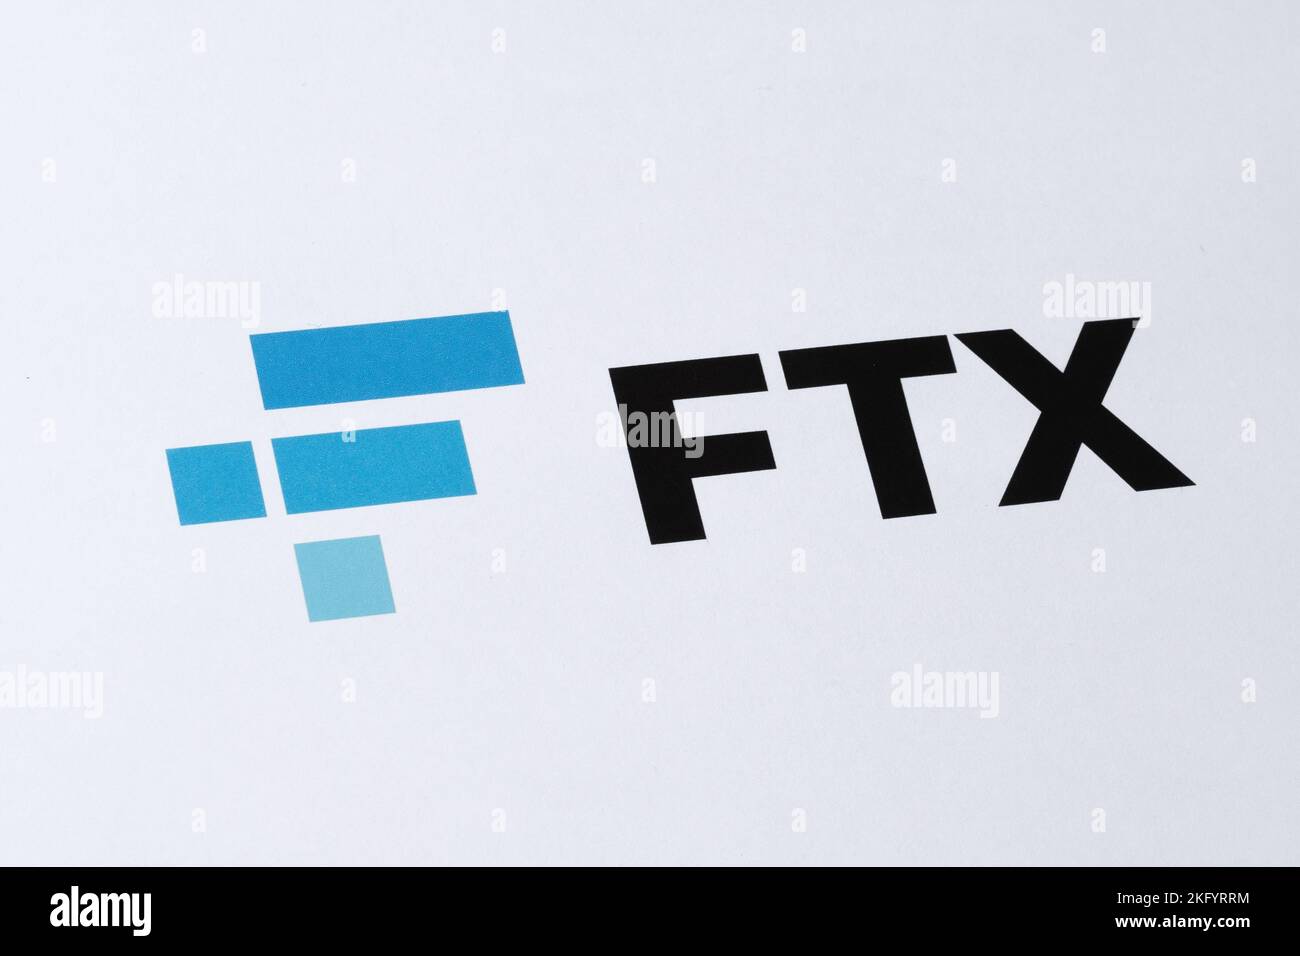 FTX Cryptocurrency Exchange-Logo auf Papier gedruckt. Stafford, United Kindom, 22. November 2022. Stockfoto